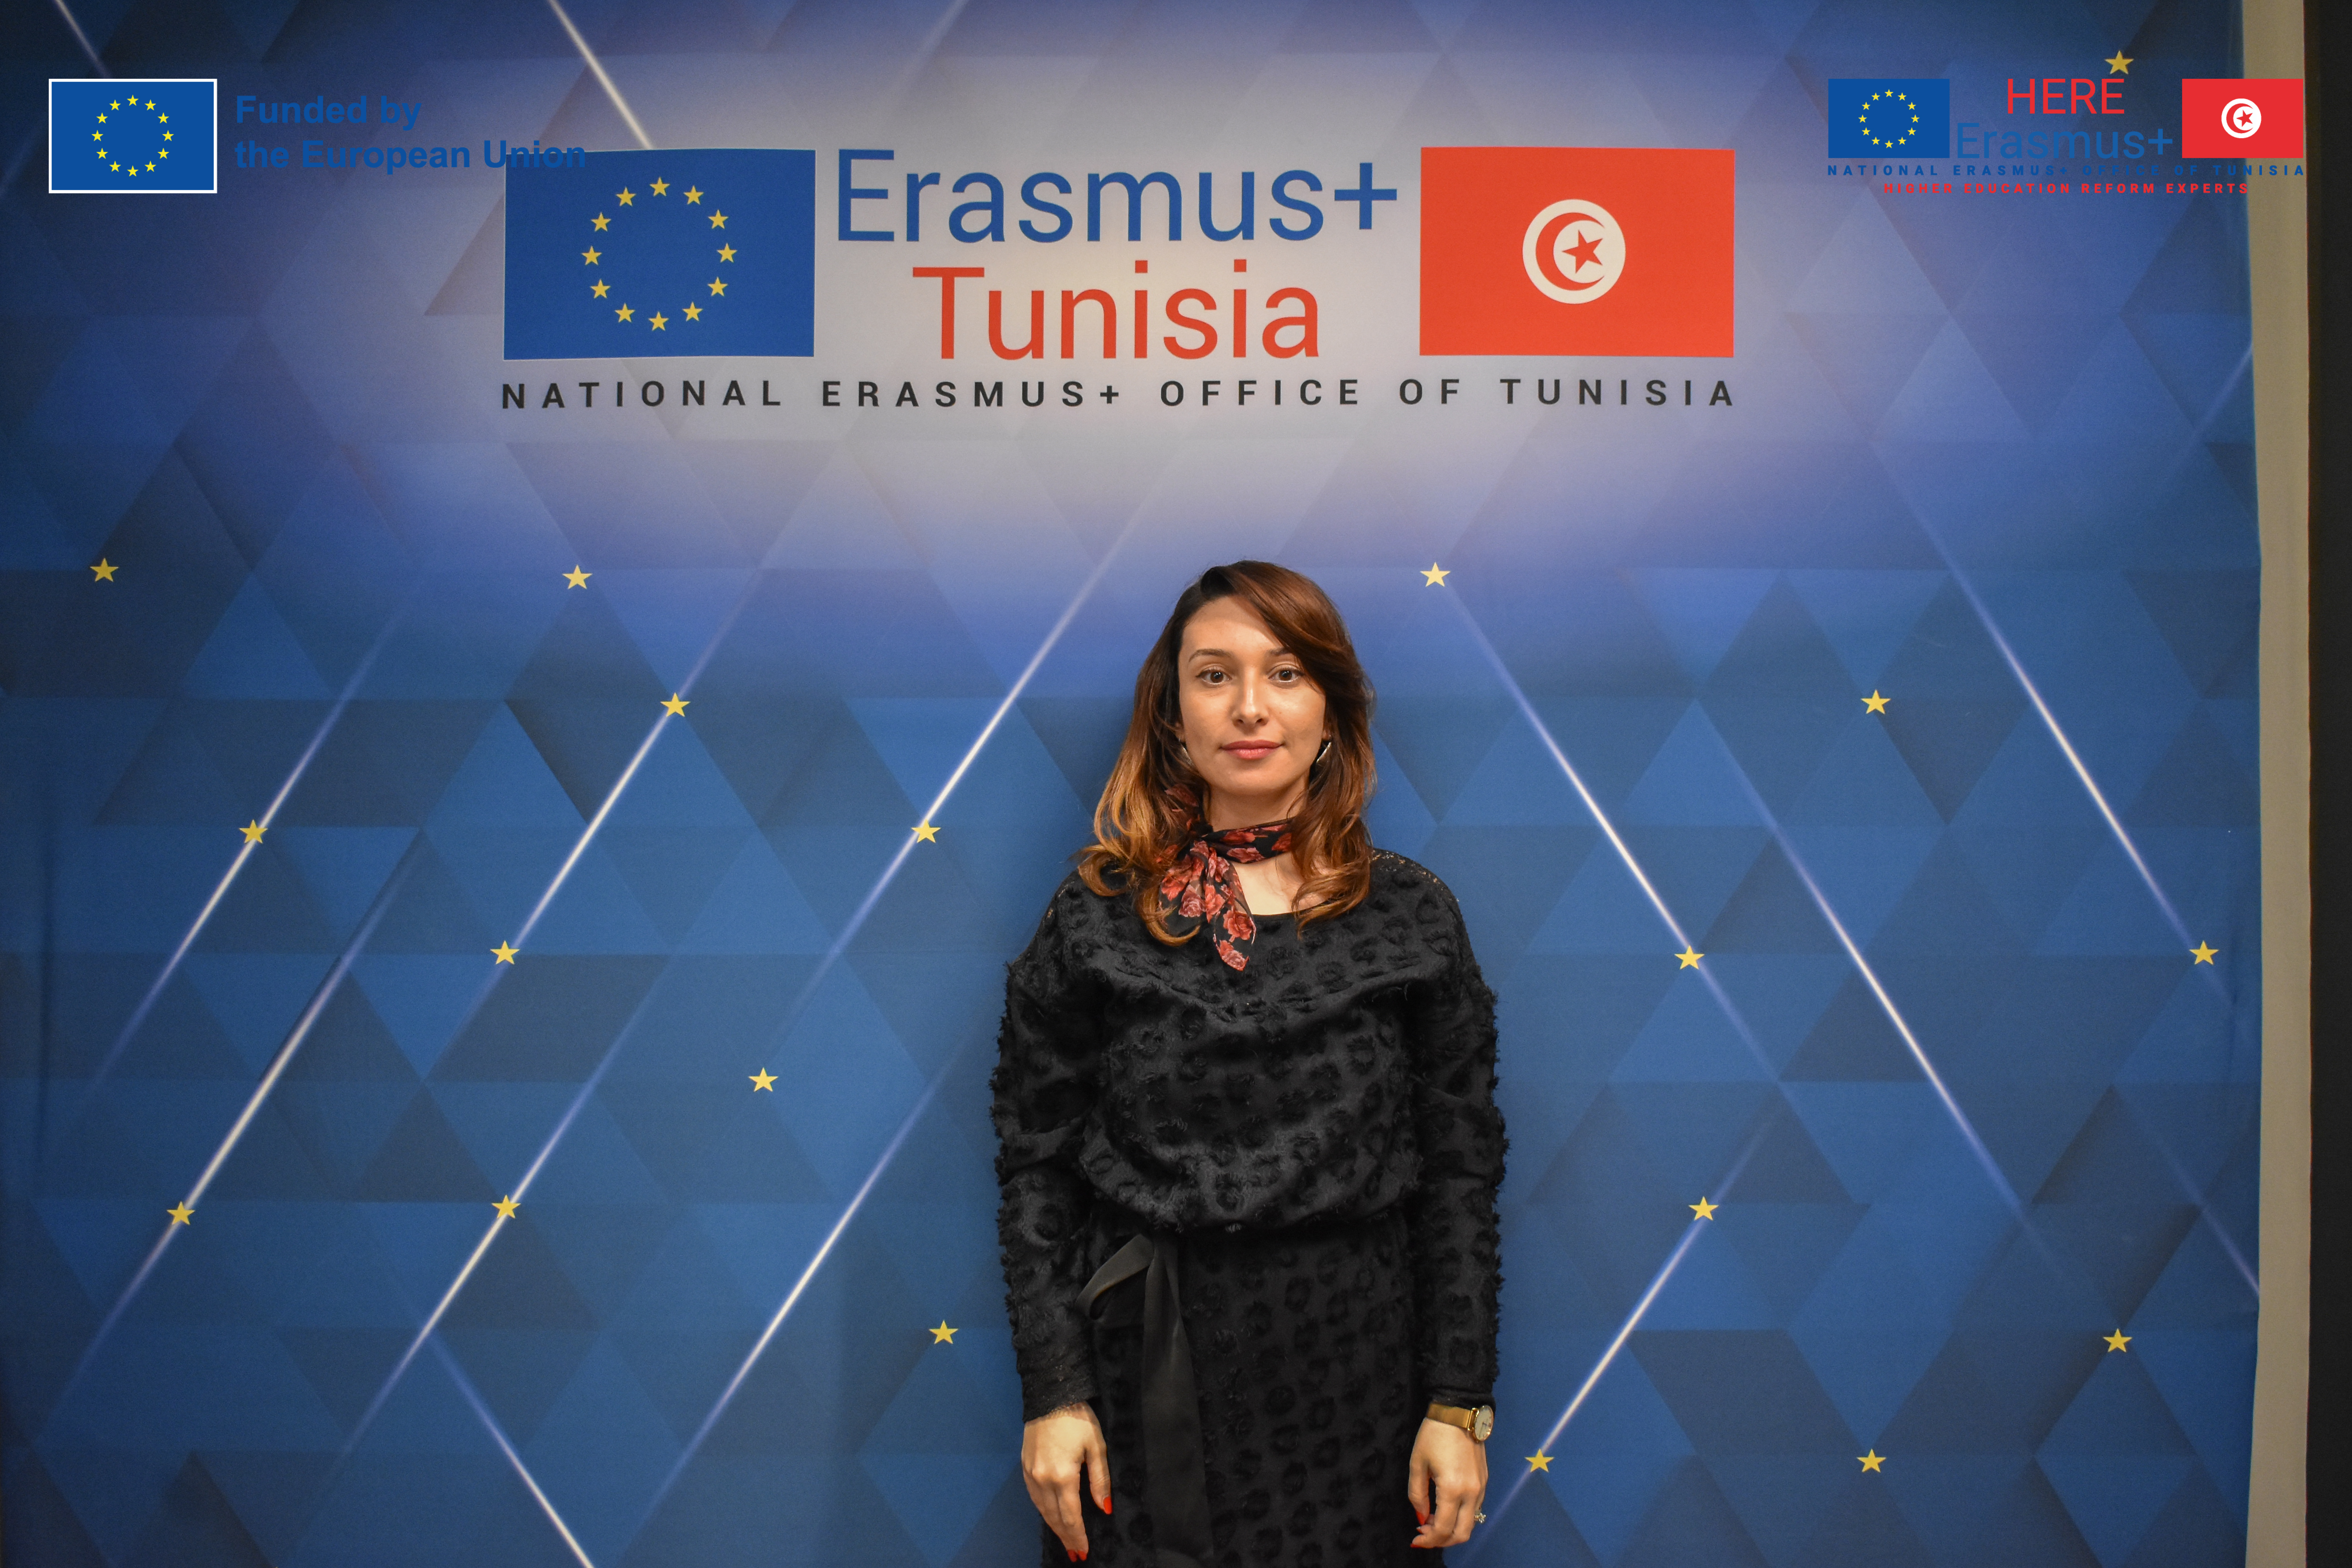 Erasmus+AmiraRJIBA